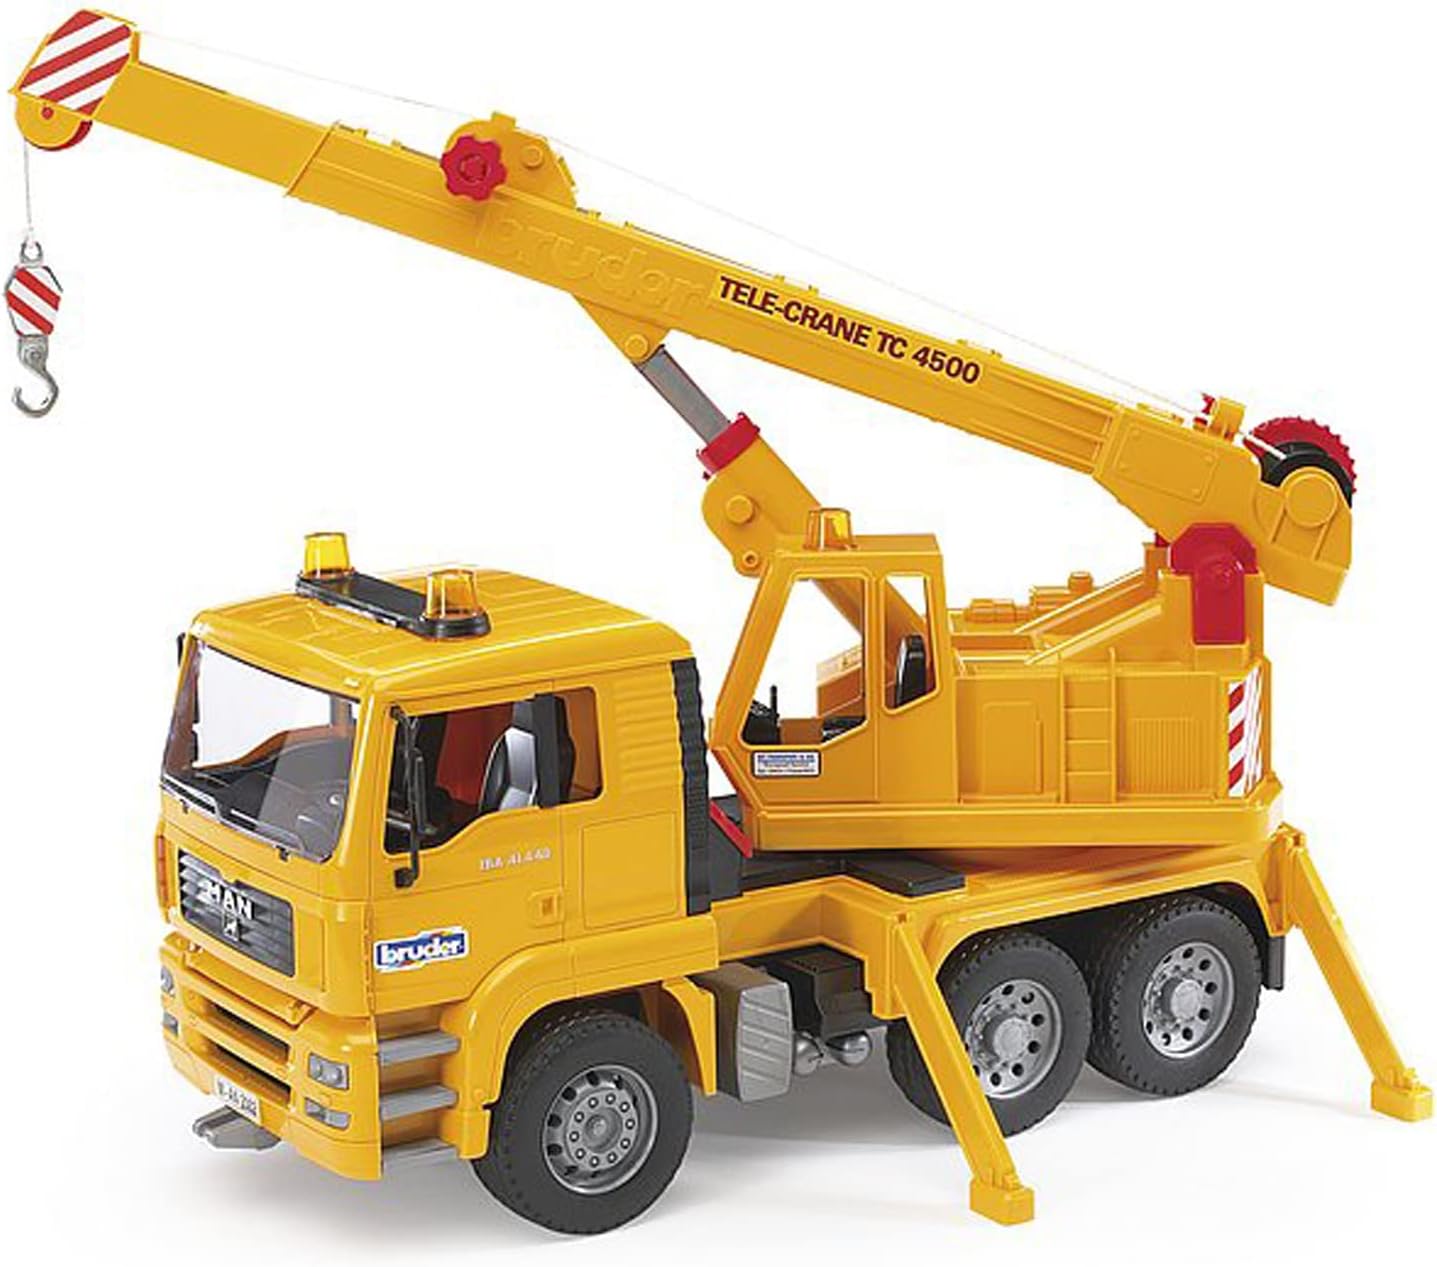 bruder 02754 Man TGA Kran-LWK Lastwagen Laster Kranwagen Baufahrzeug Baustelle Spielzeug 1:16